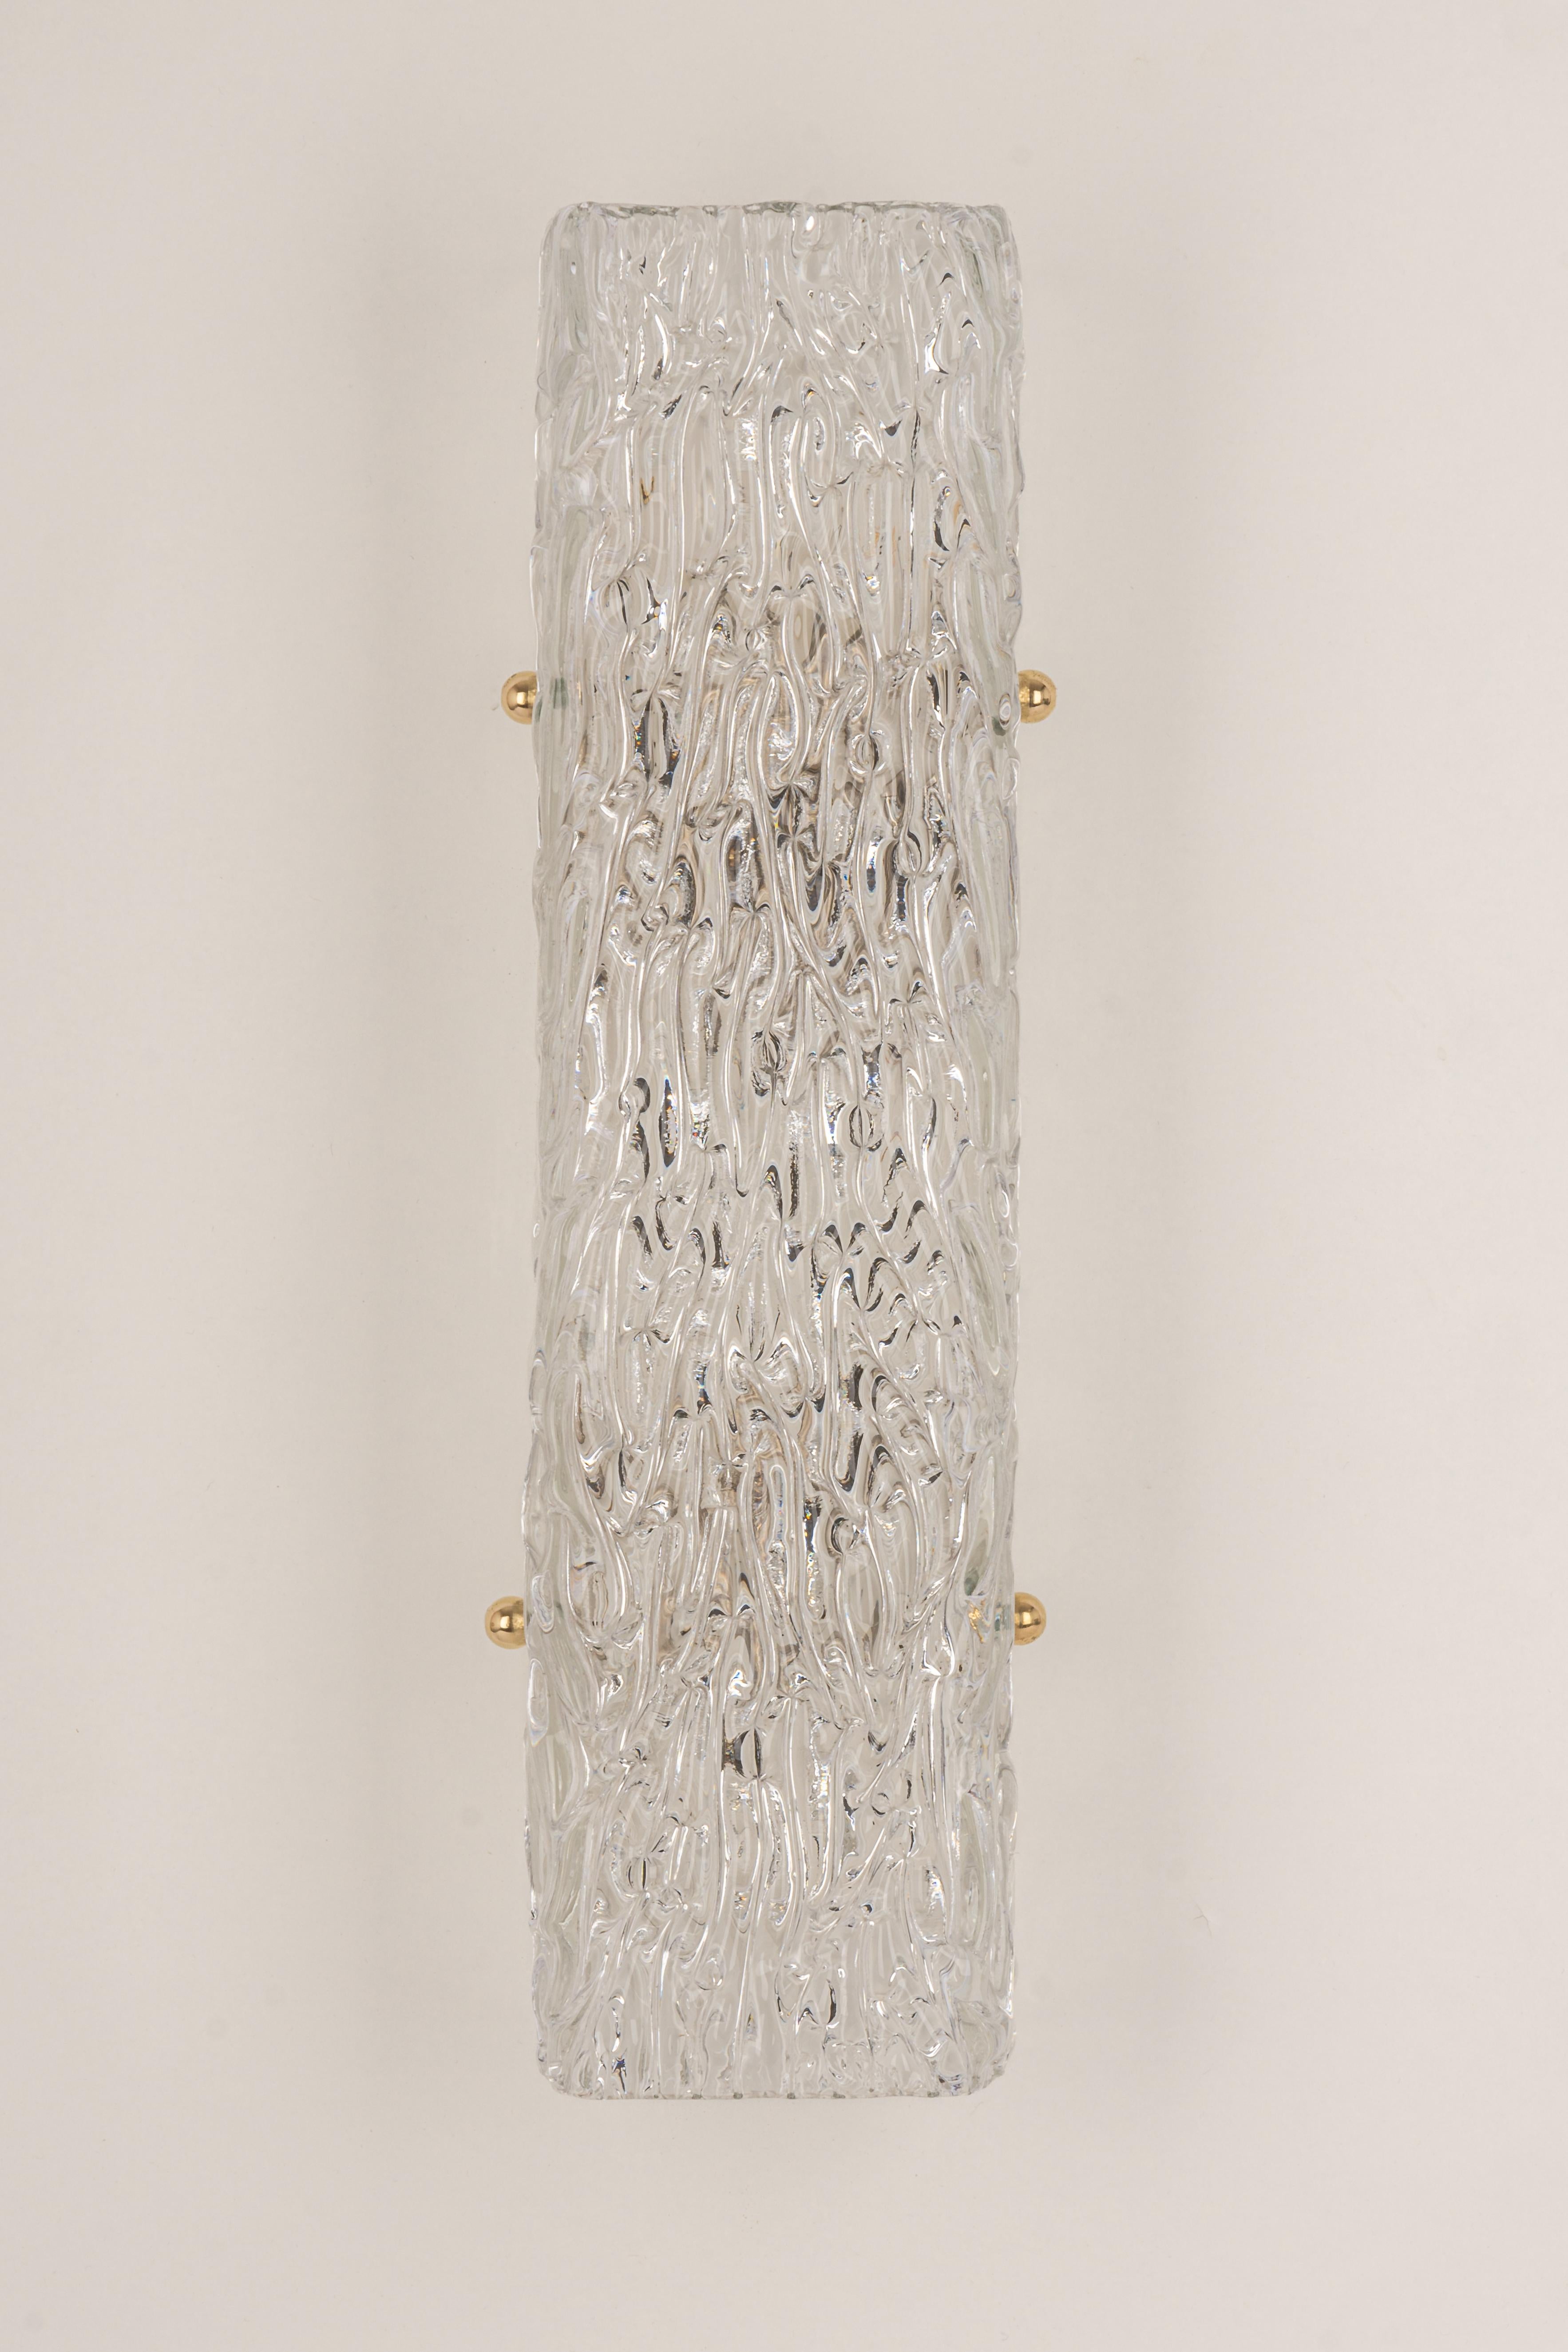 Austrian Large Single Kalmar Sconce Glass Wall Lights, Austria, 1960s For Sale